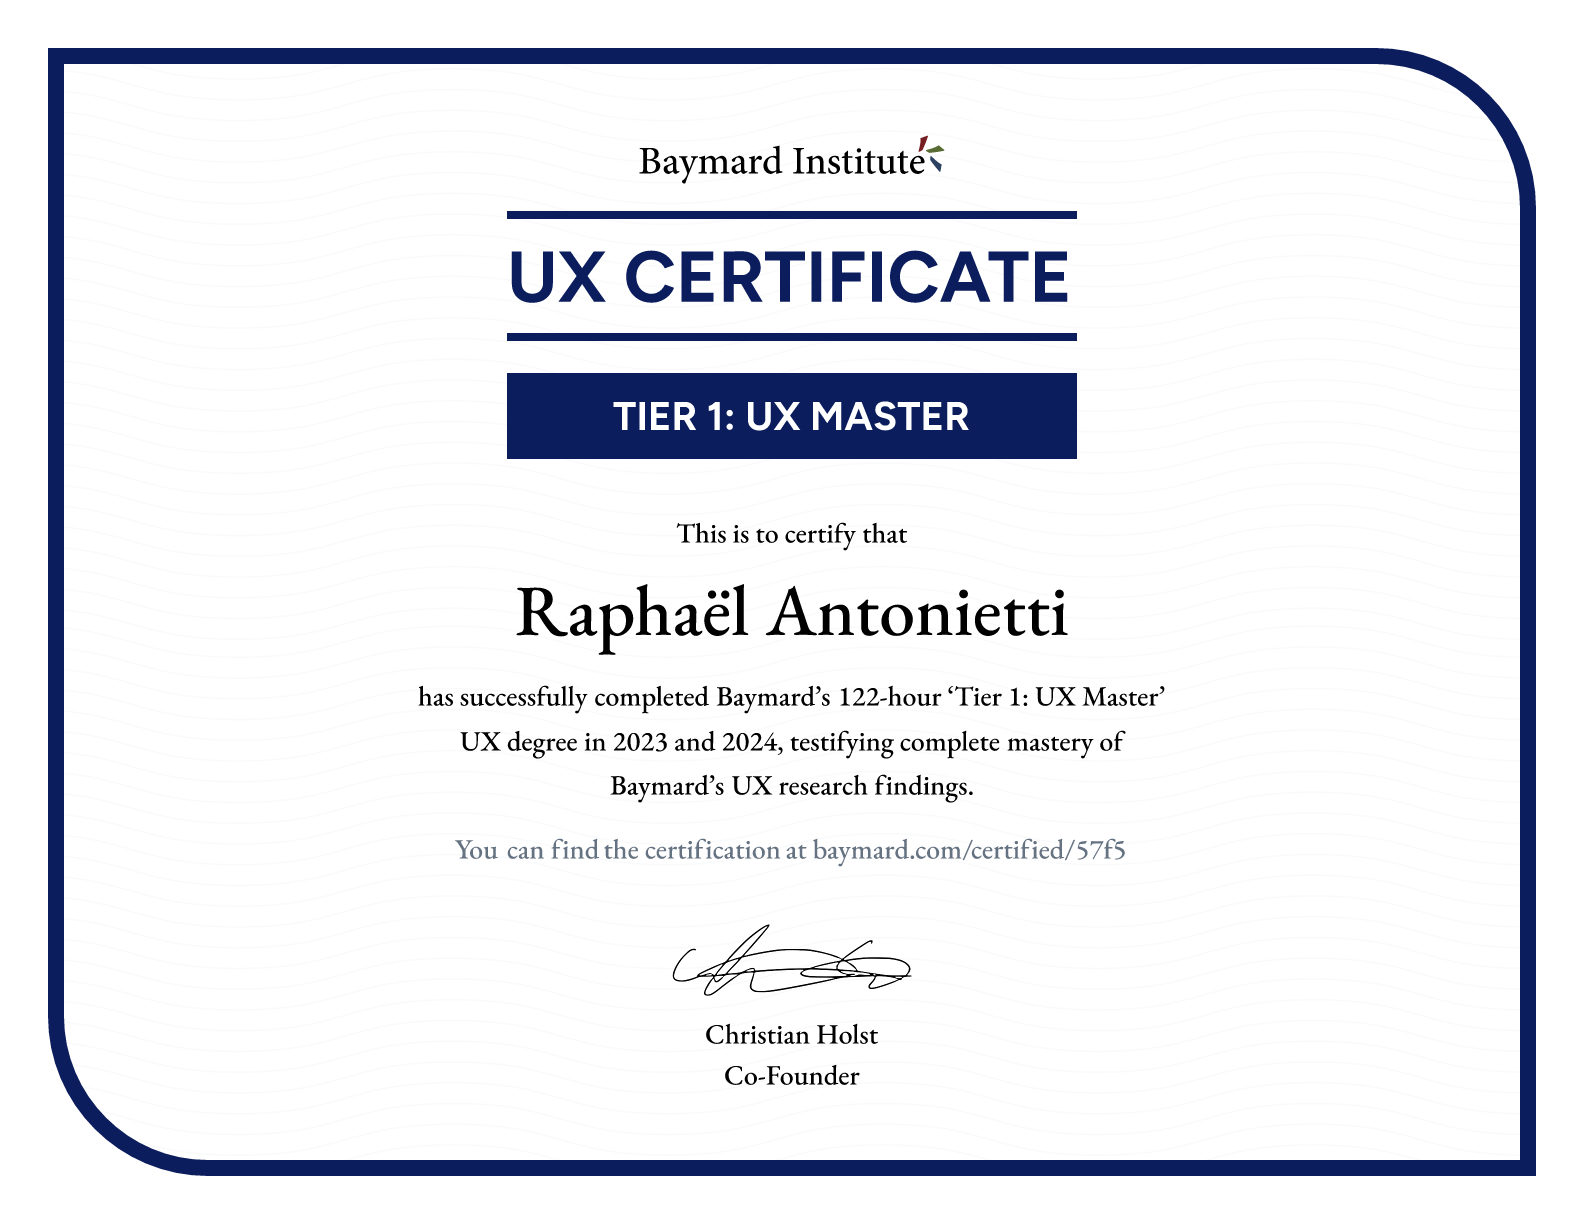 Raphaël Antonietti’s certificate